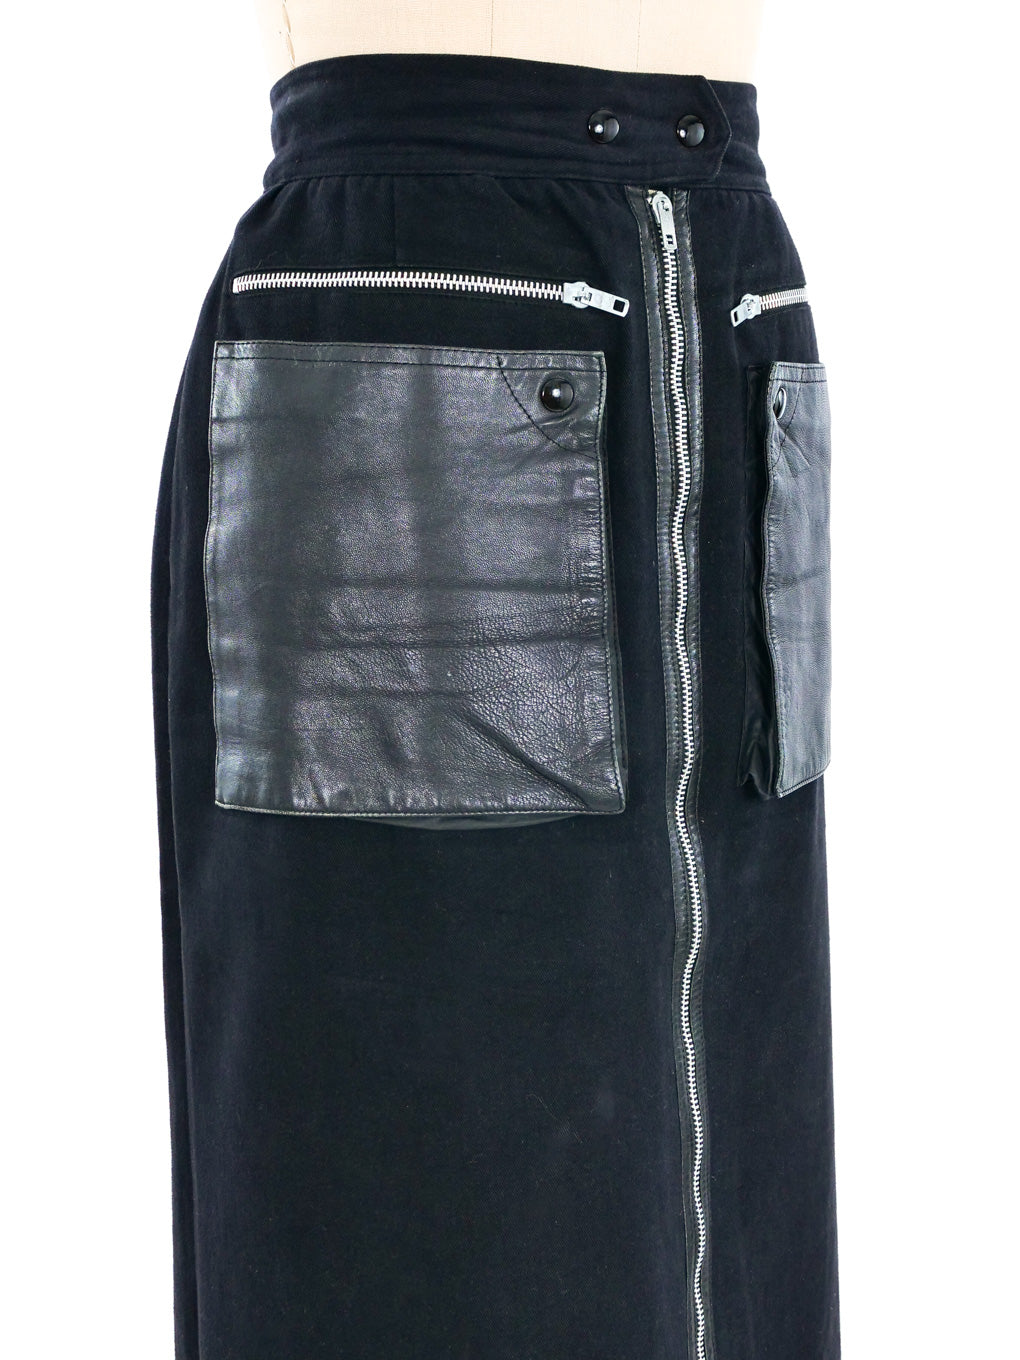 Jean-Charles De Castelbajac Leather Pocket Zipper Skirt